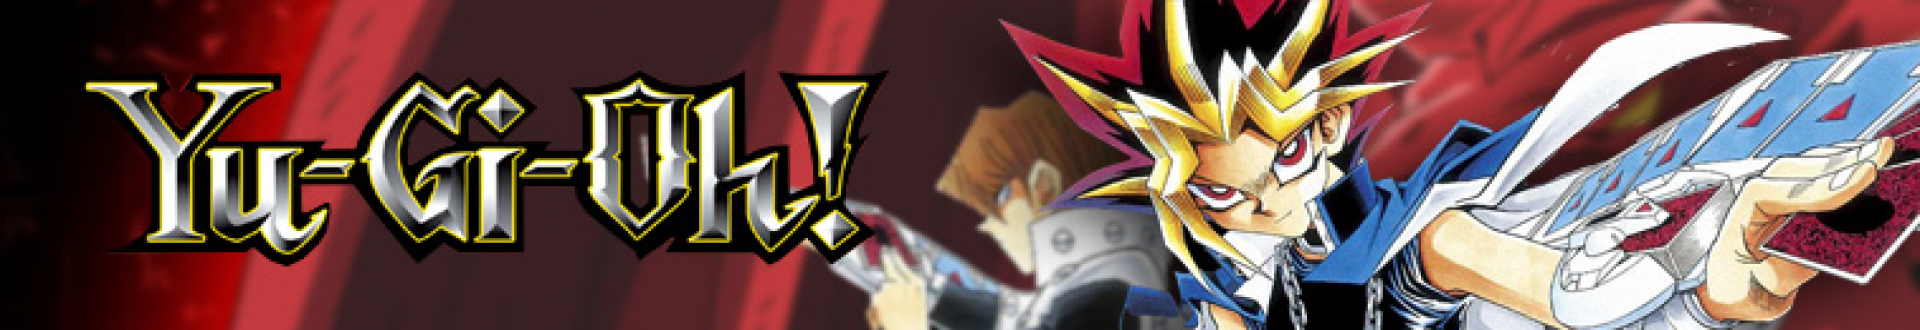 Image illustrative de Yu-Gi-Oh! Duel Monsters